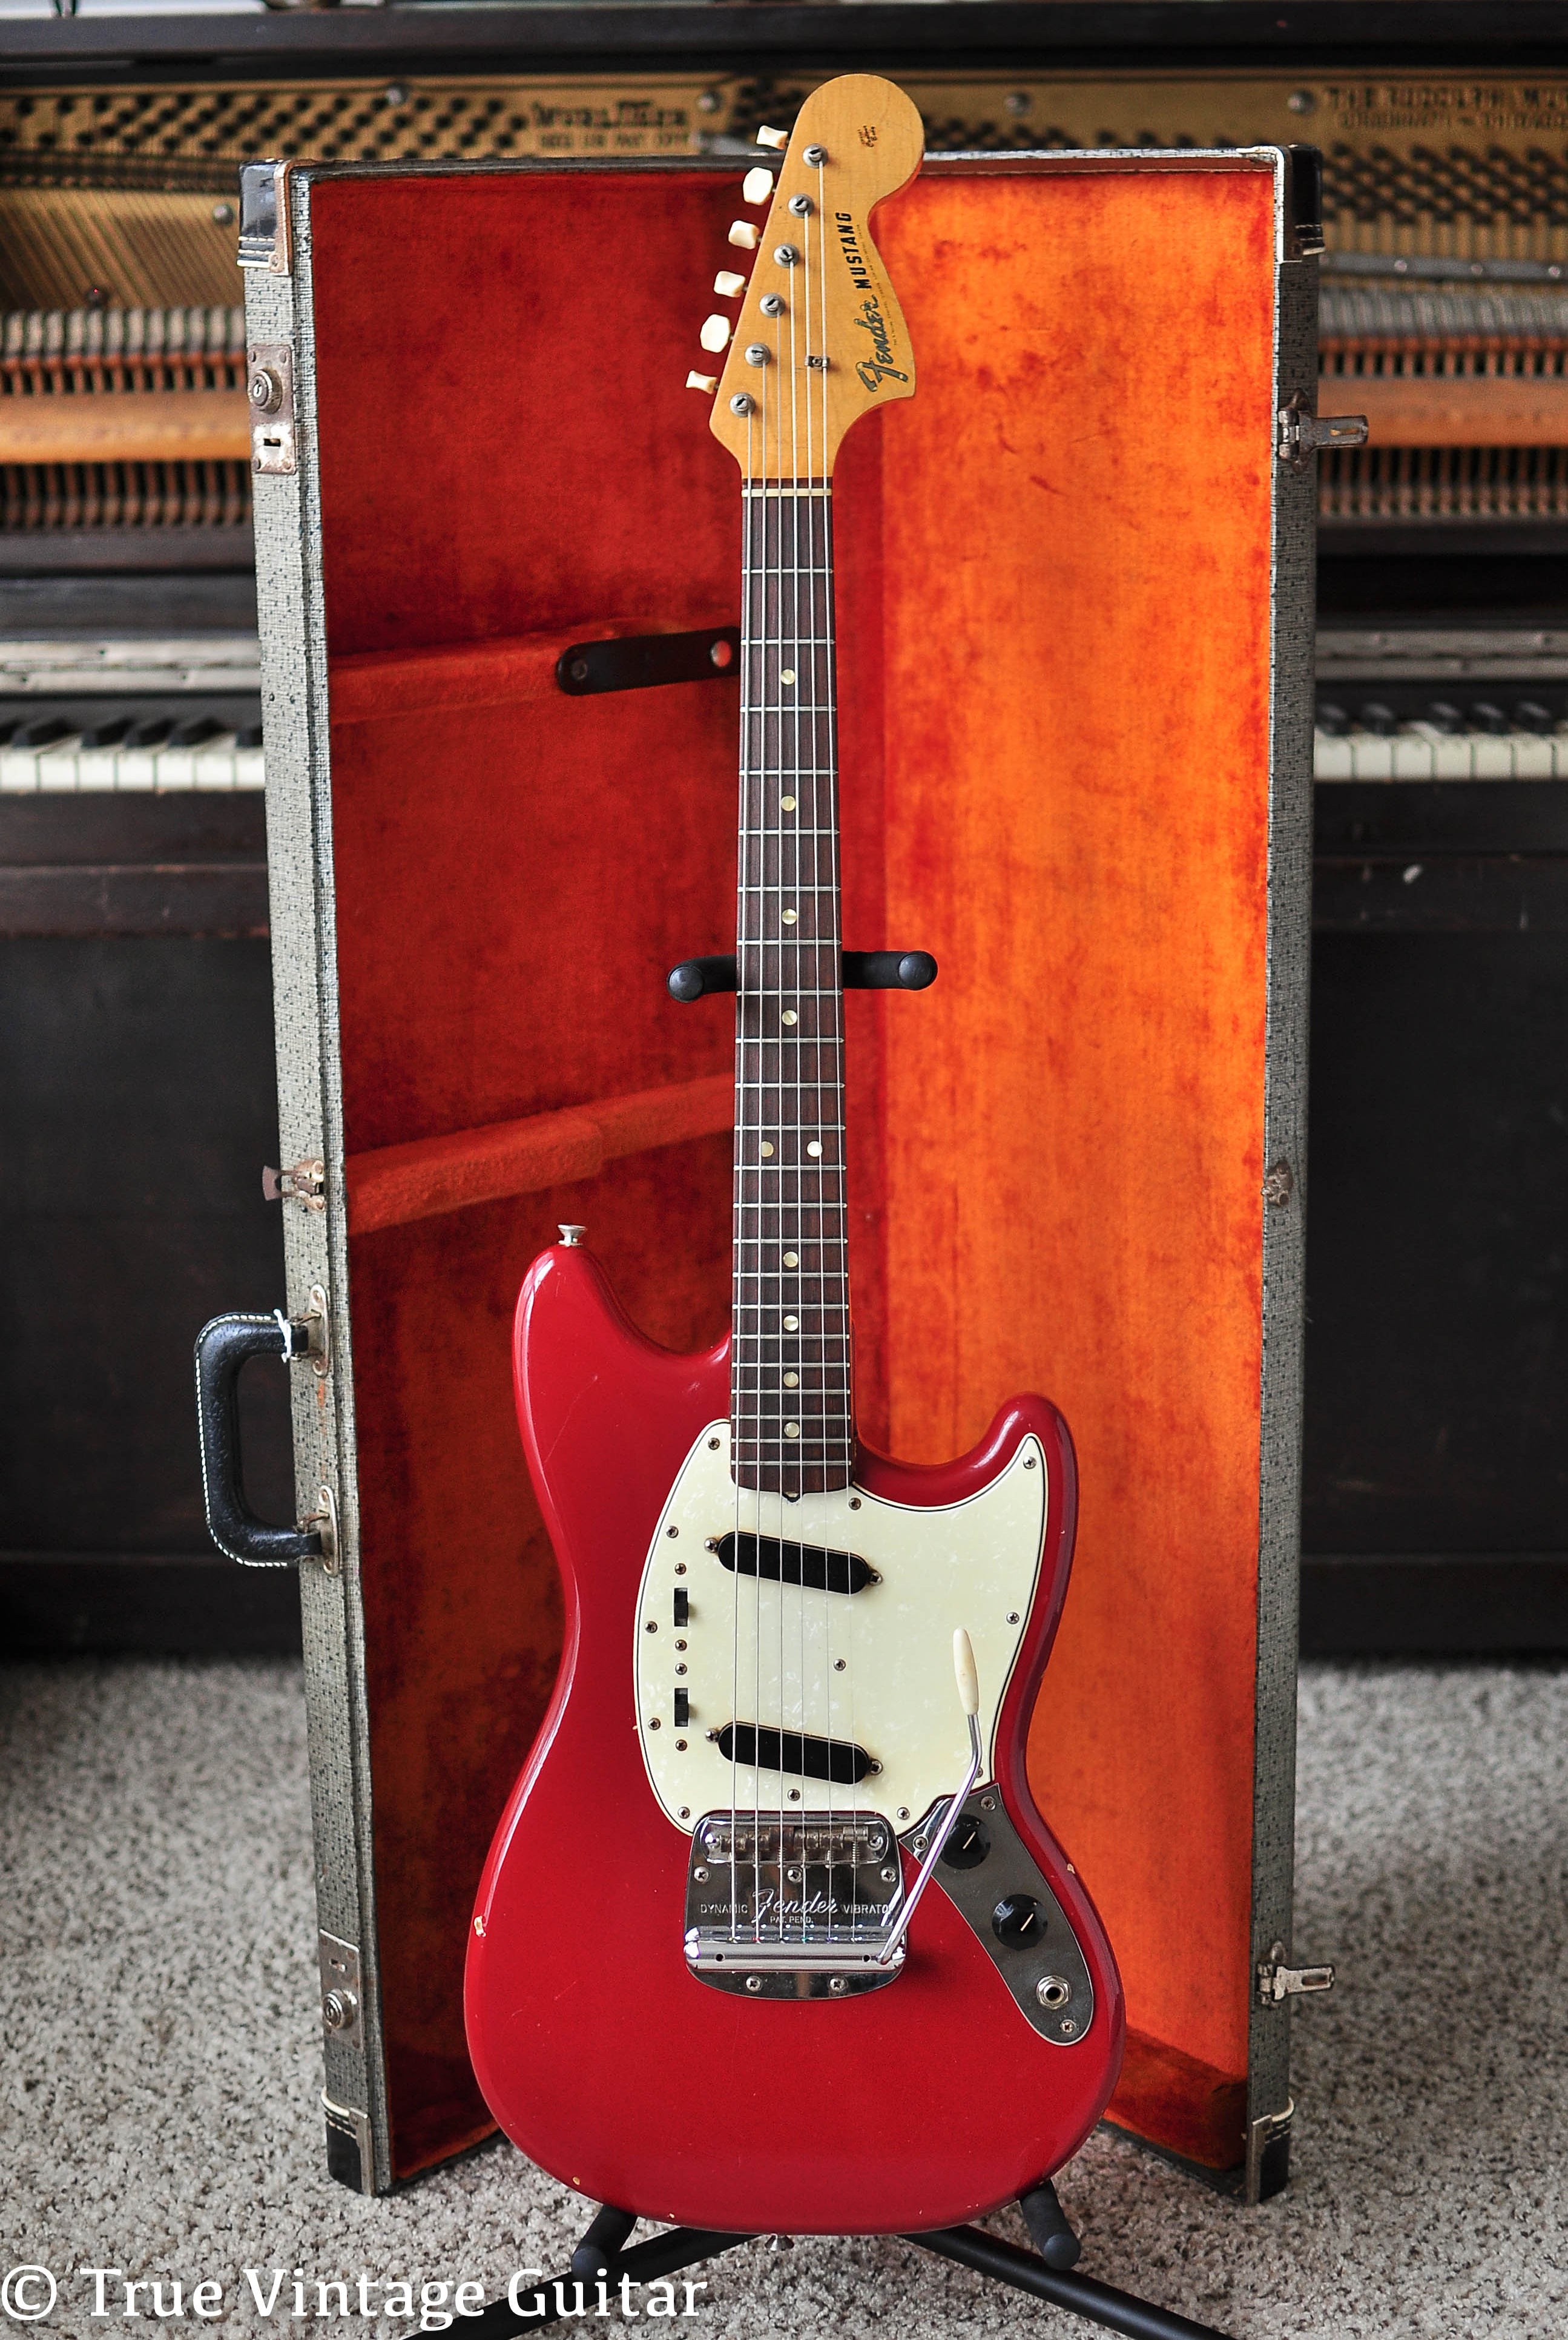 Vintage 1966 Fender Mustang Red guitar